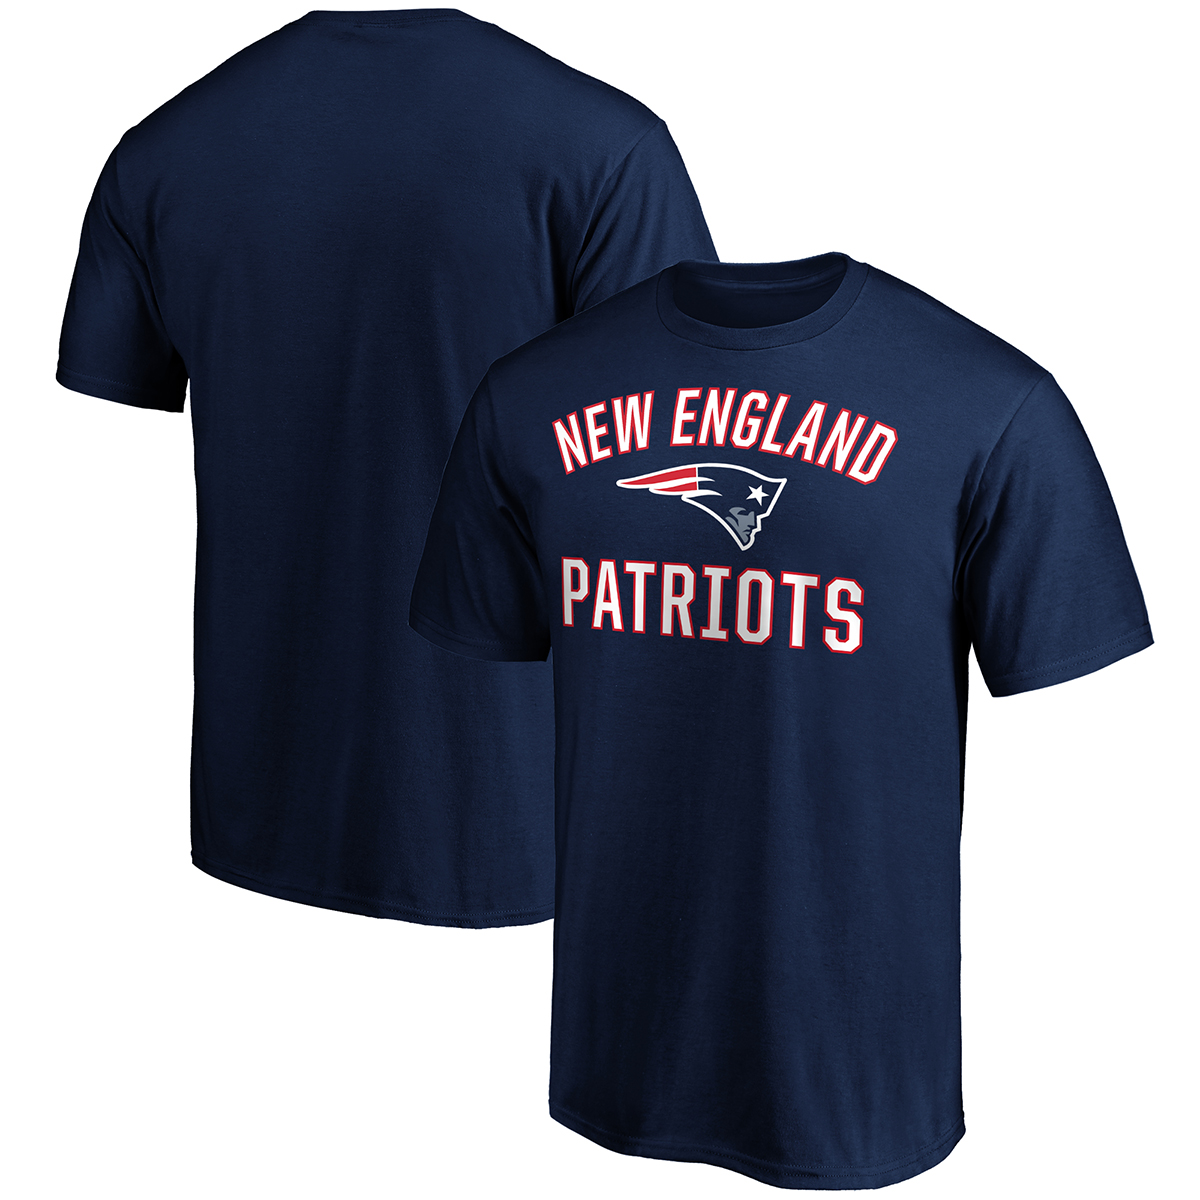 New England Patriots Men's Short-Sleeve Victory Arch Tee